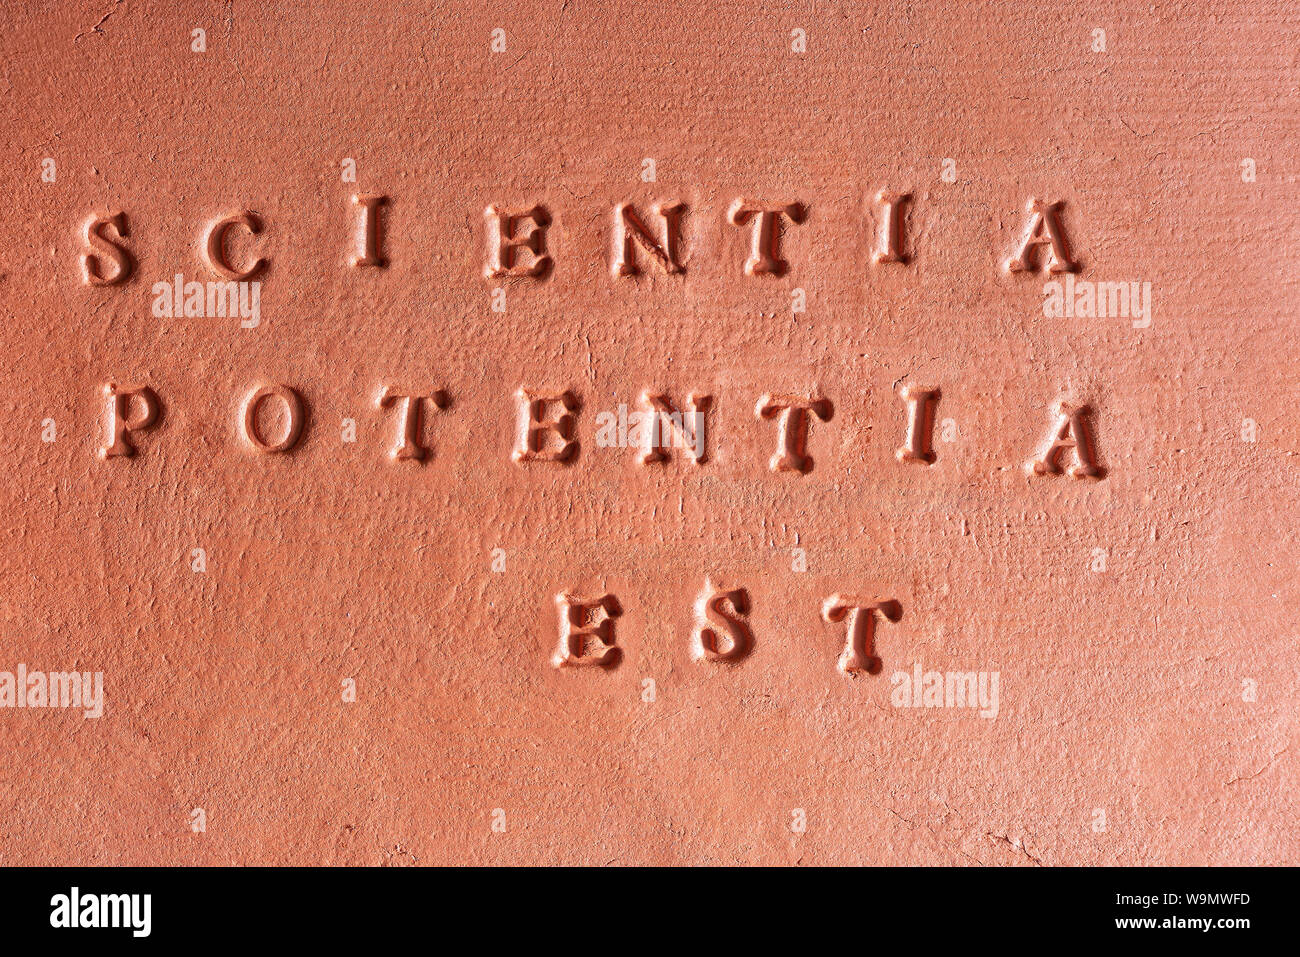 the phrase  “Scientia Potentia Est” written in Latin on a terracotta tablet Stock Photo